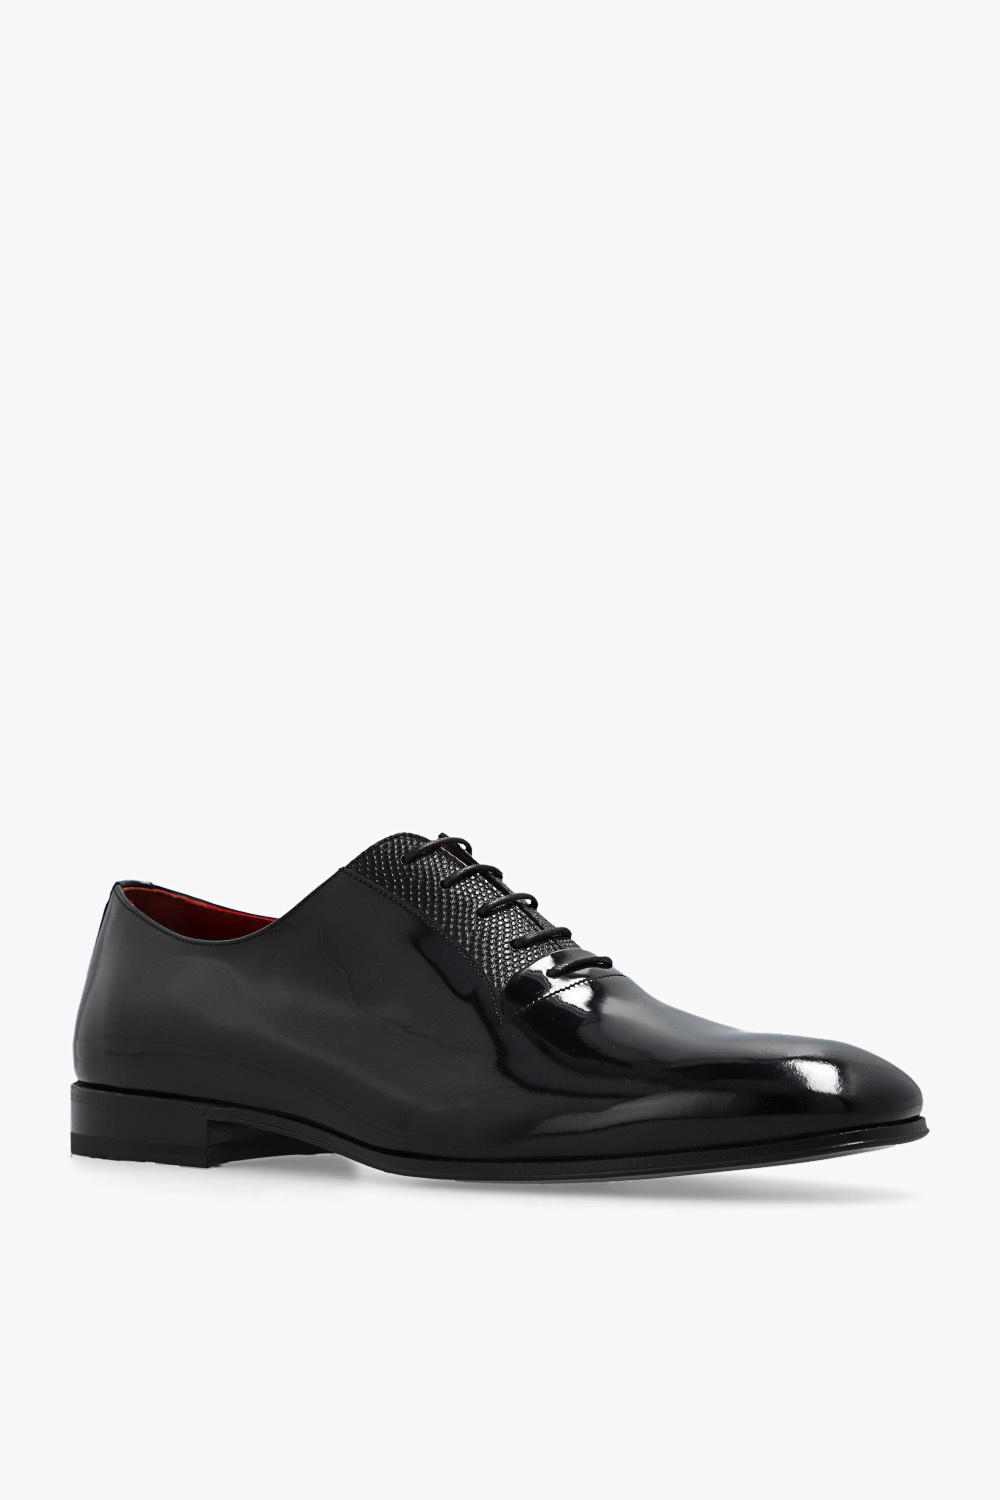 Salvatore Ferragamo ‘Gianbattis’ leather shoes